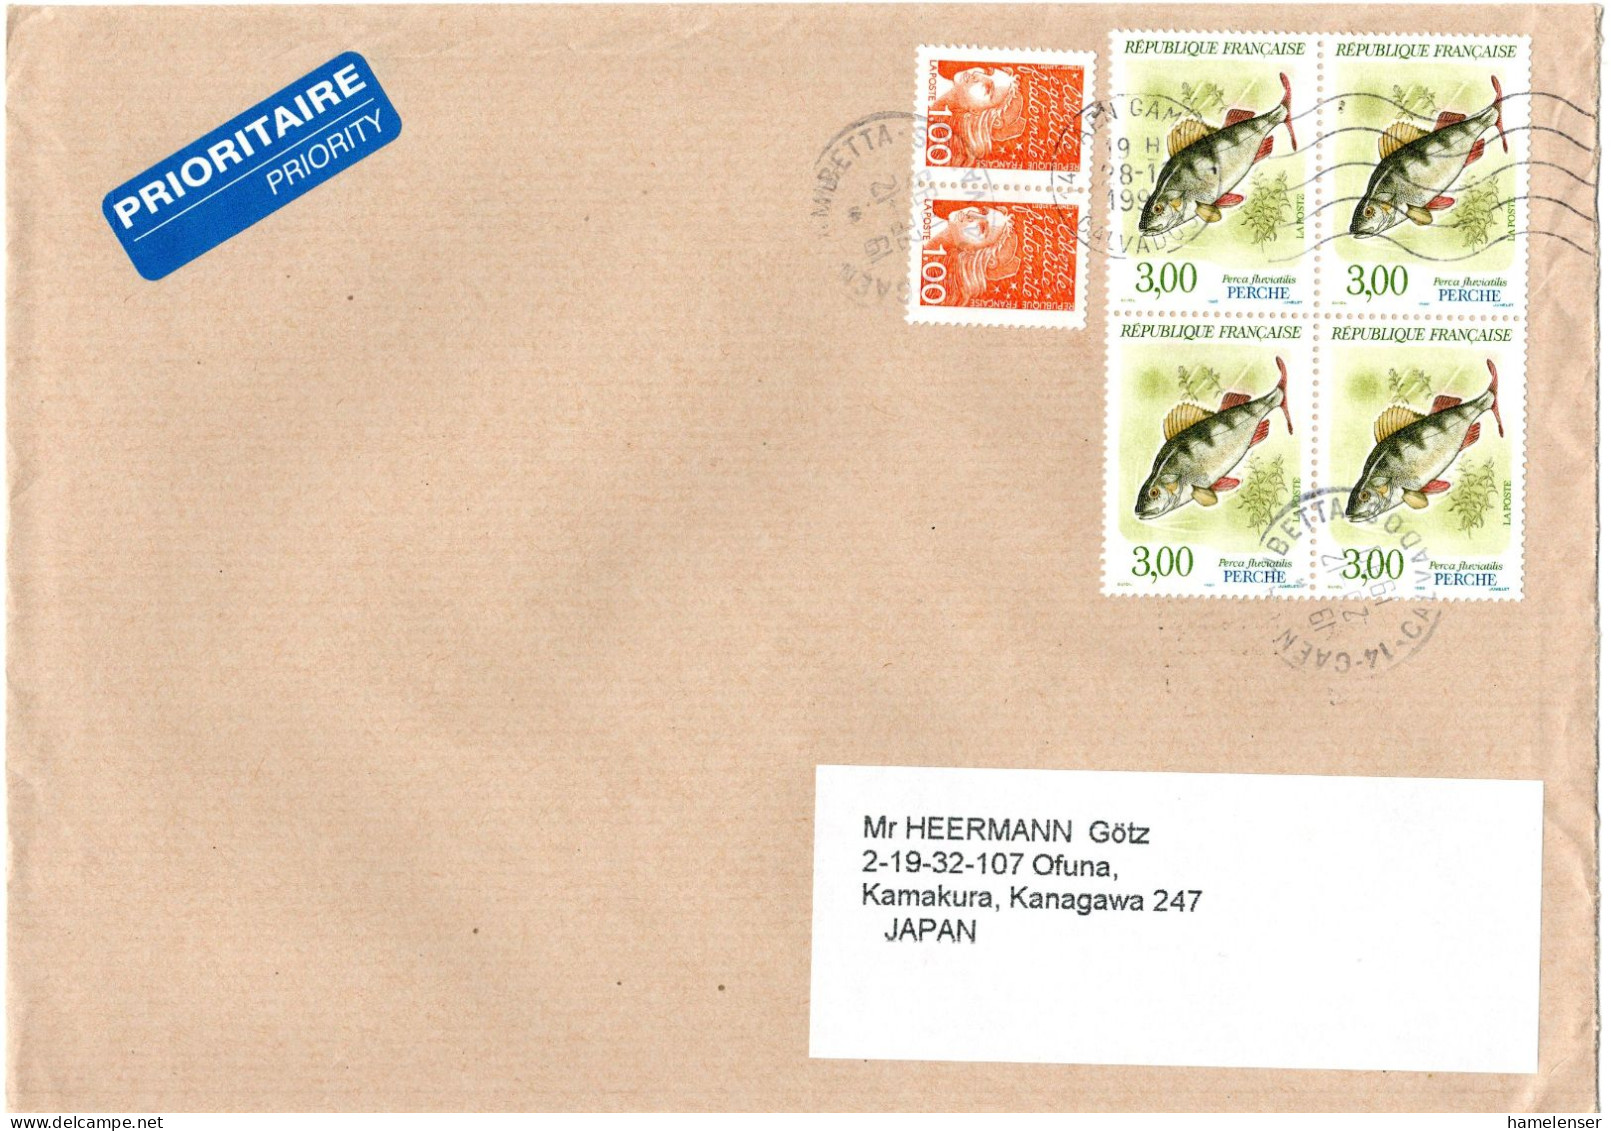 L66354 - Frankreich - 1999 - 3F Flussbarsch 田 MiF A LpBf CAEN -> Japan - Lettres & Documents